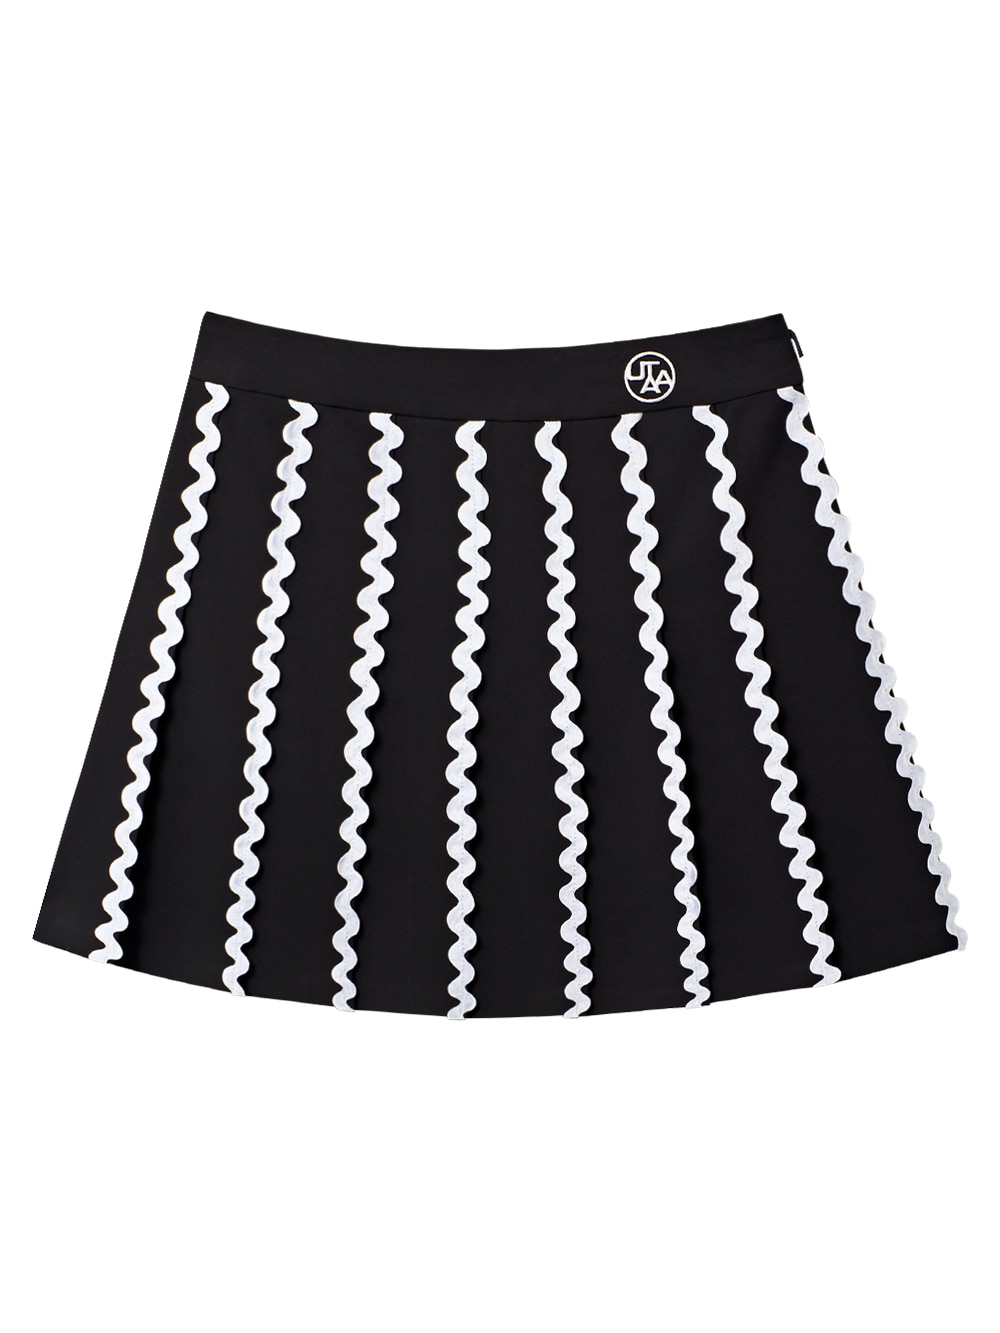 UTAA Tilde Wave Pleats Skirt : Black (UB2SKF260BK)